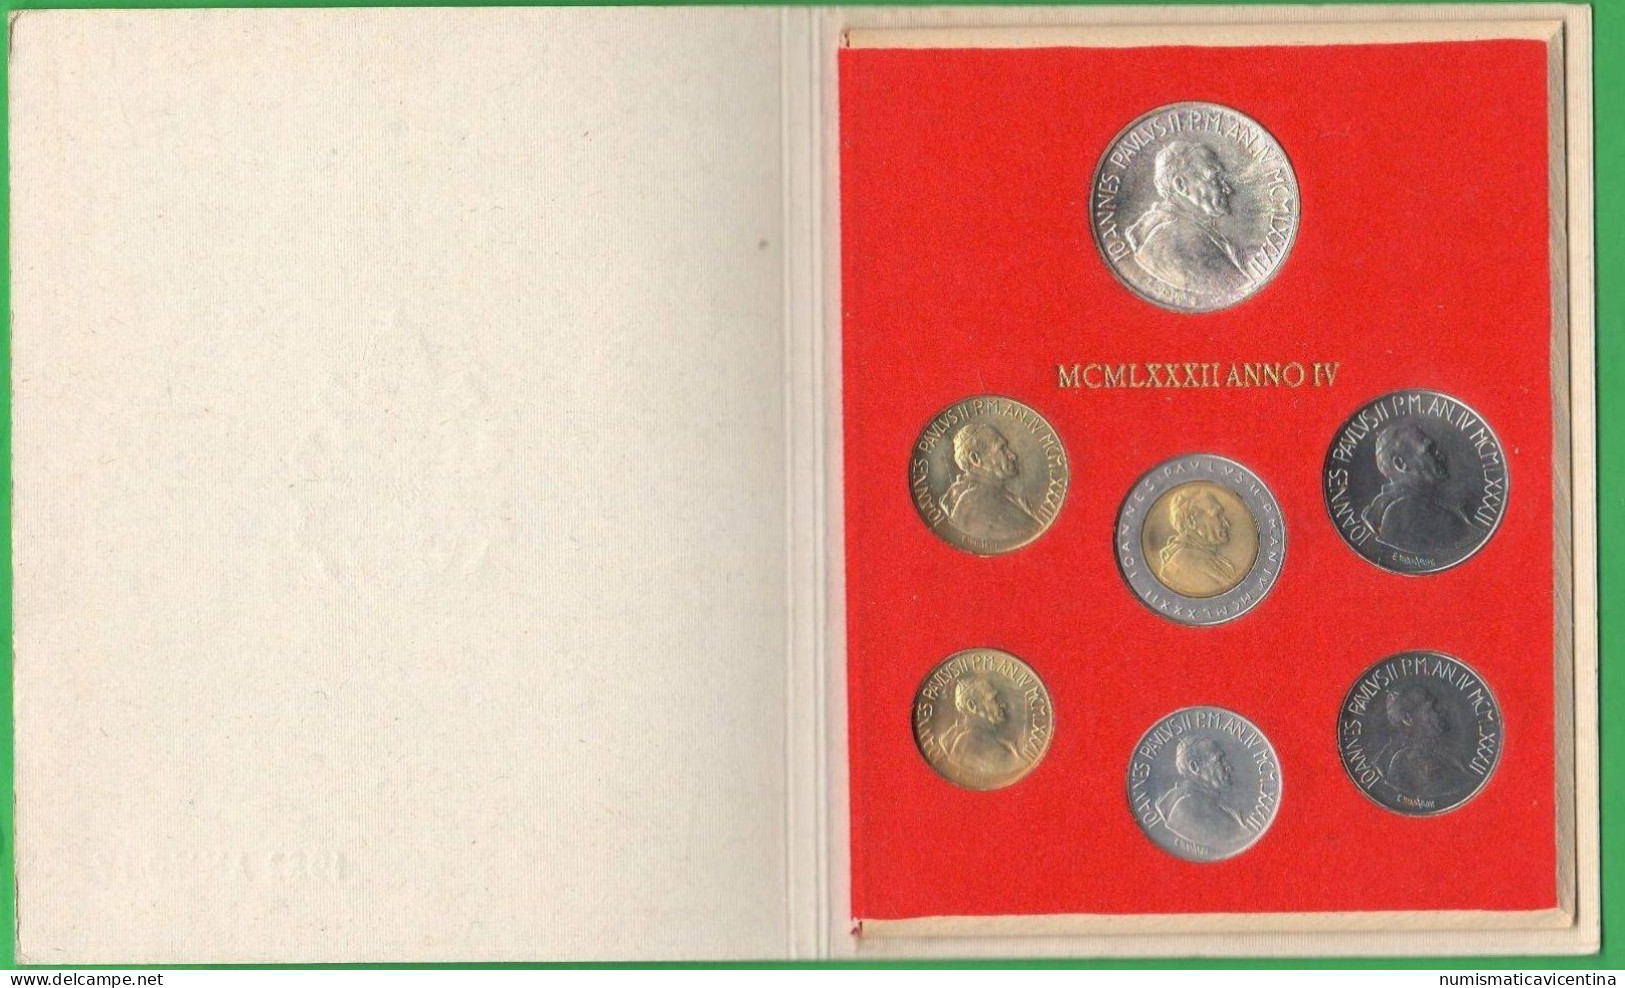 Vaticano Serie 1982 Wojtyla Vatikan City Anno IV° UNC Divisionale 7 Valori Set Coin Papal City - Vaticano